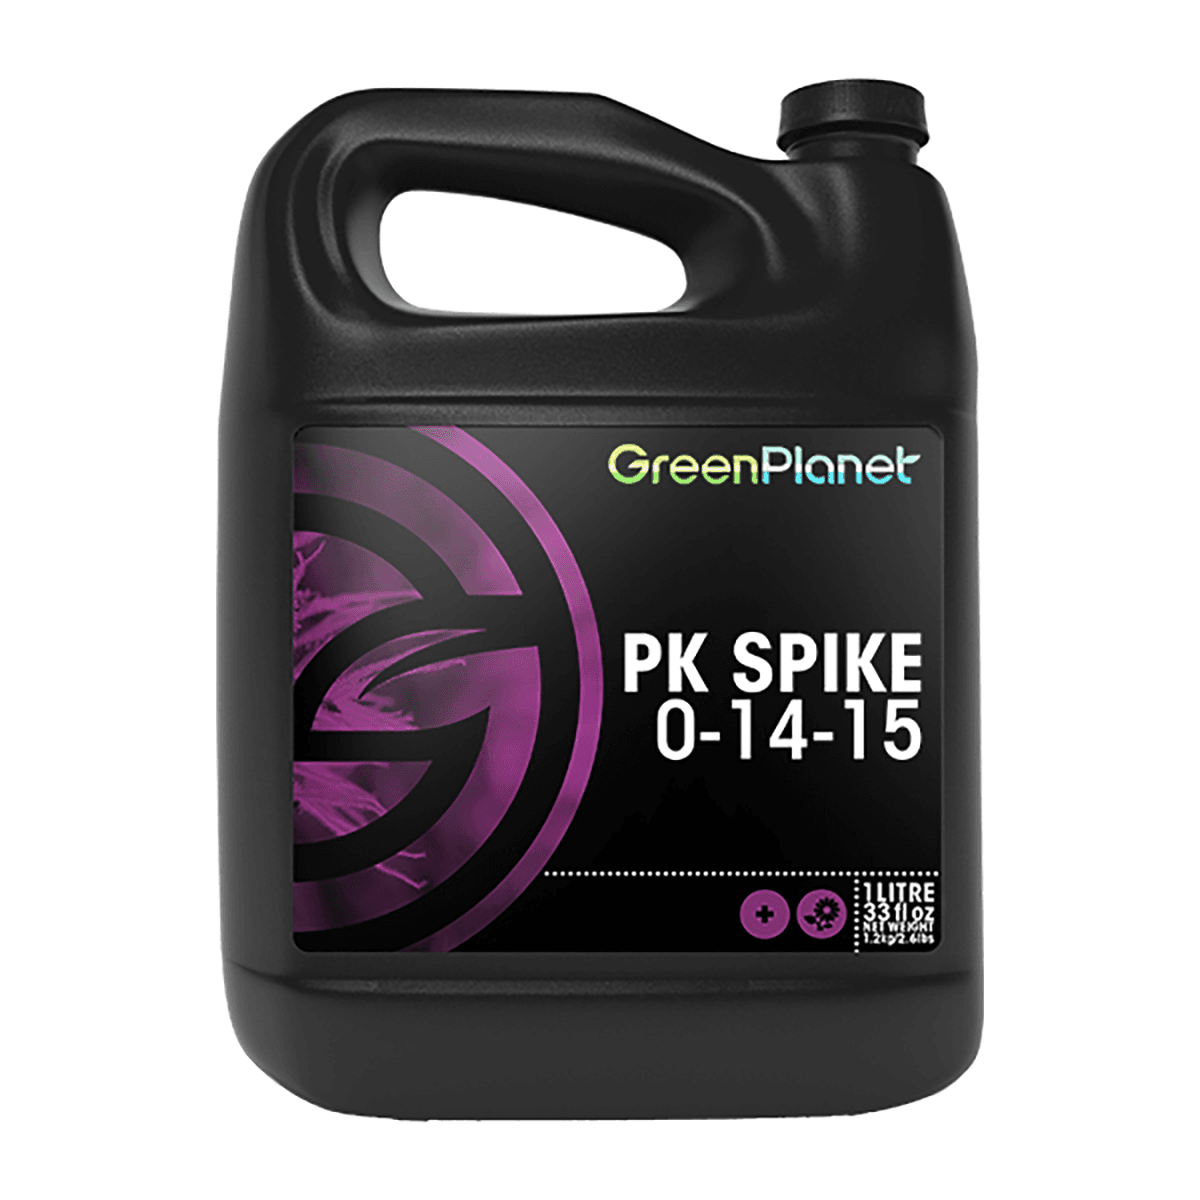 PK Spike 25L - Green planet